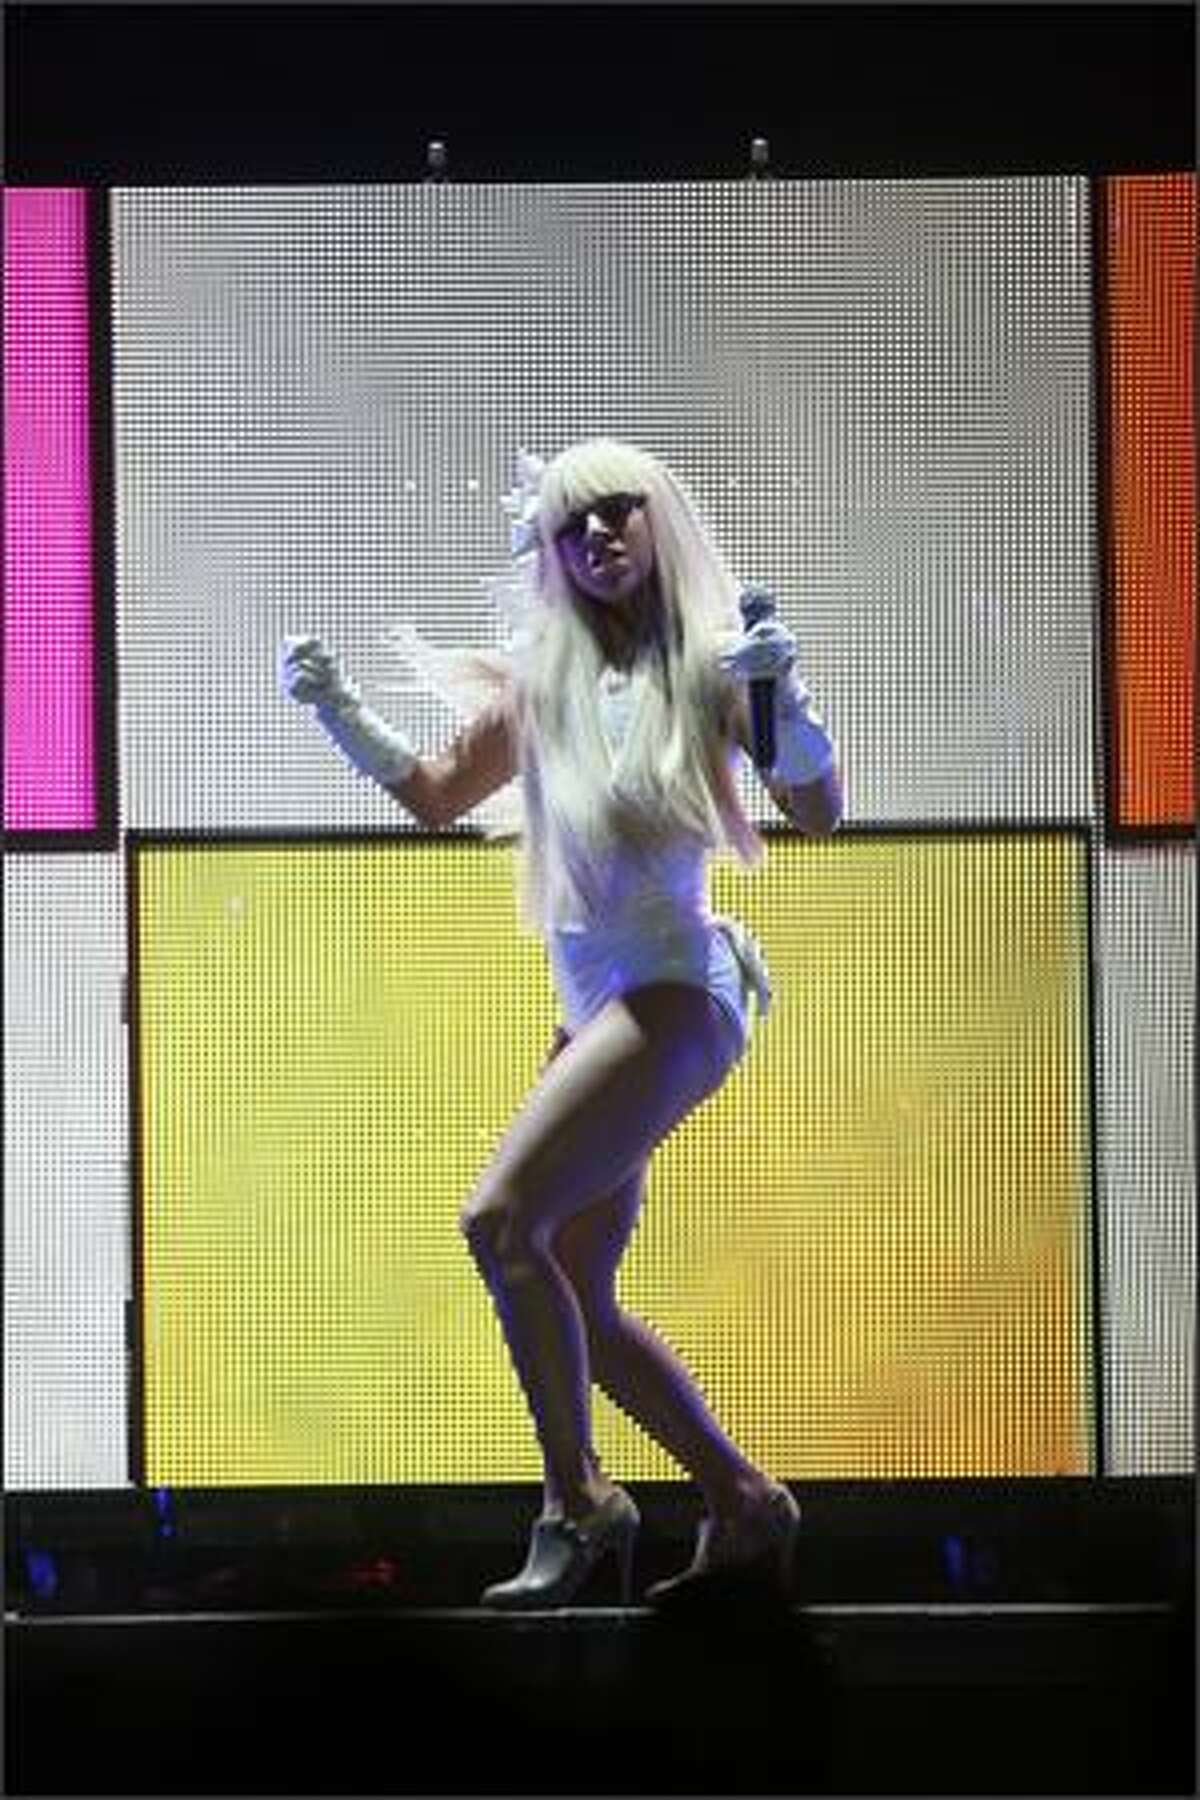 Lady Gaga performs at the Tacoma Dome in Tacoma on Saturday, No. 22, 2008.